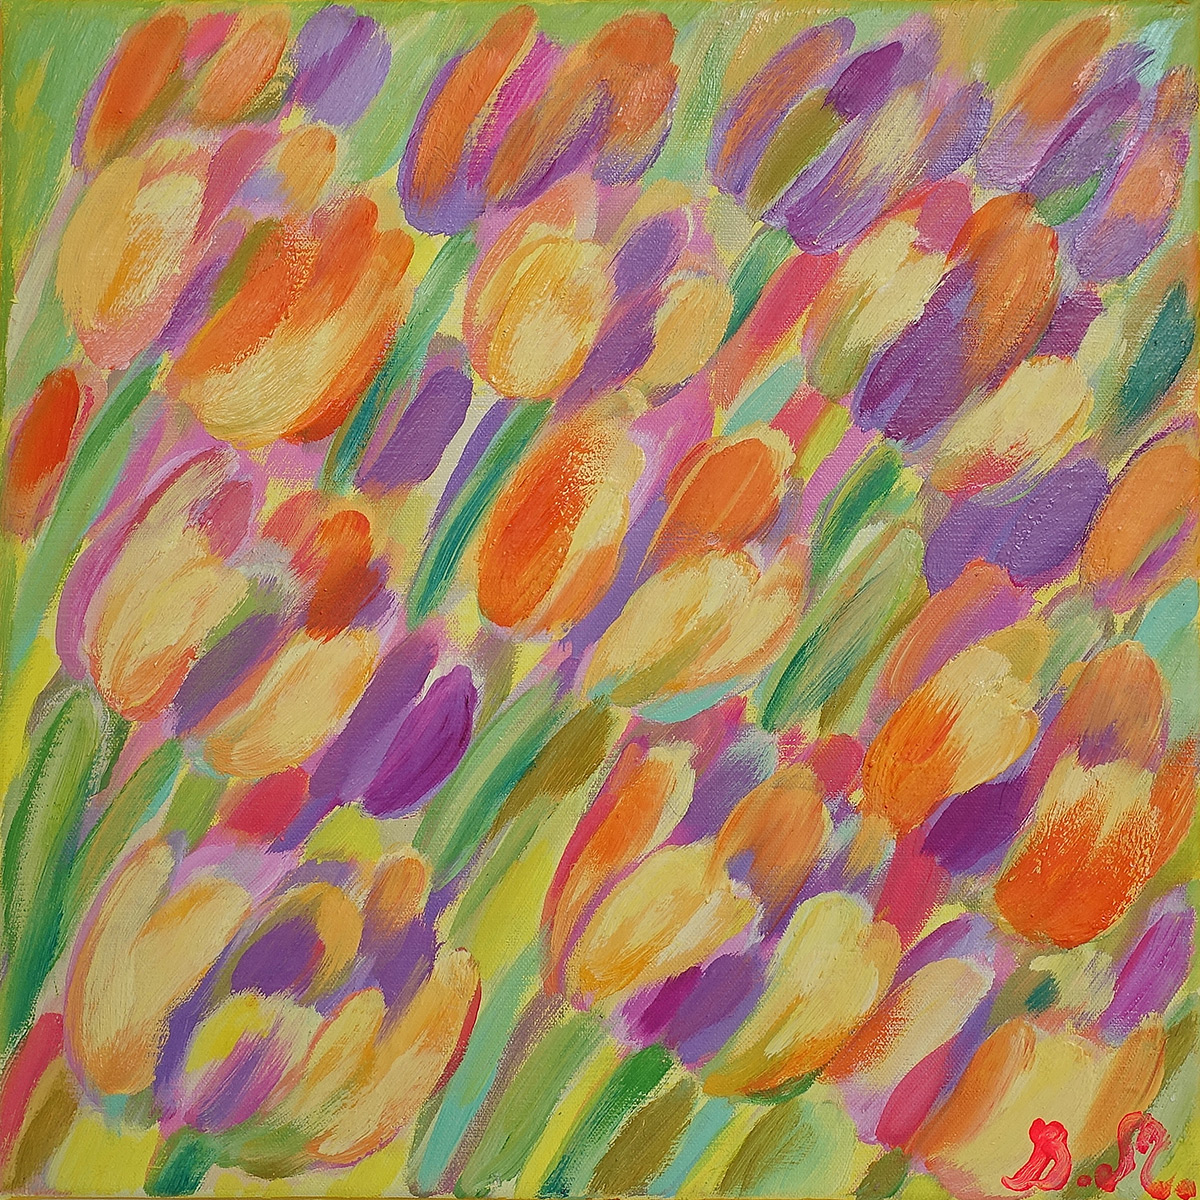 Beata Murawska - The Rite of Spring (Oil on Canvas | Size: 46 x 46 cm | Price: 4500 PLN)